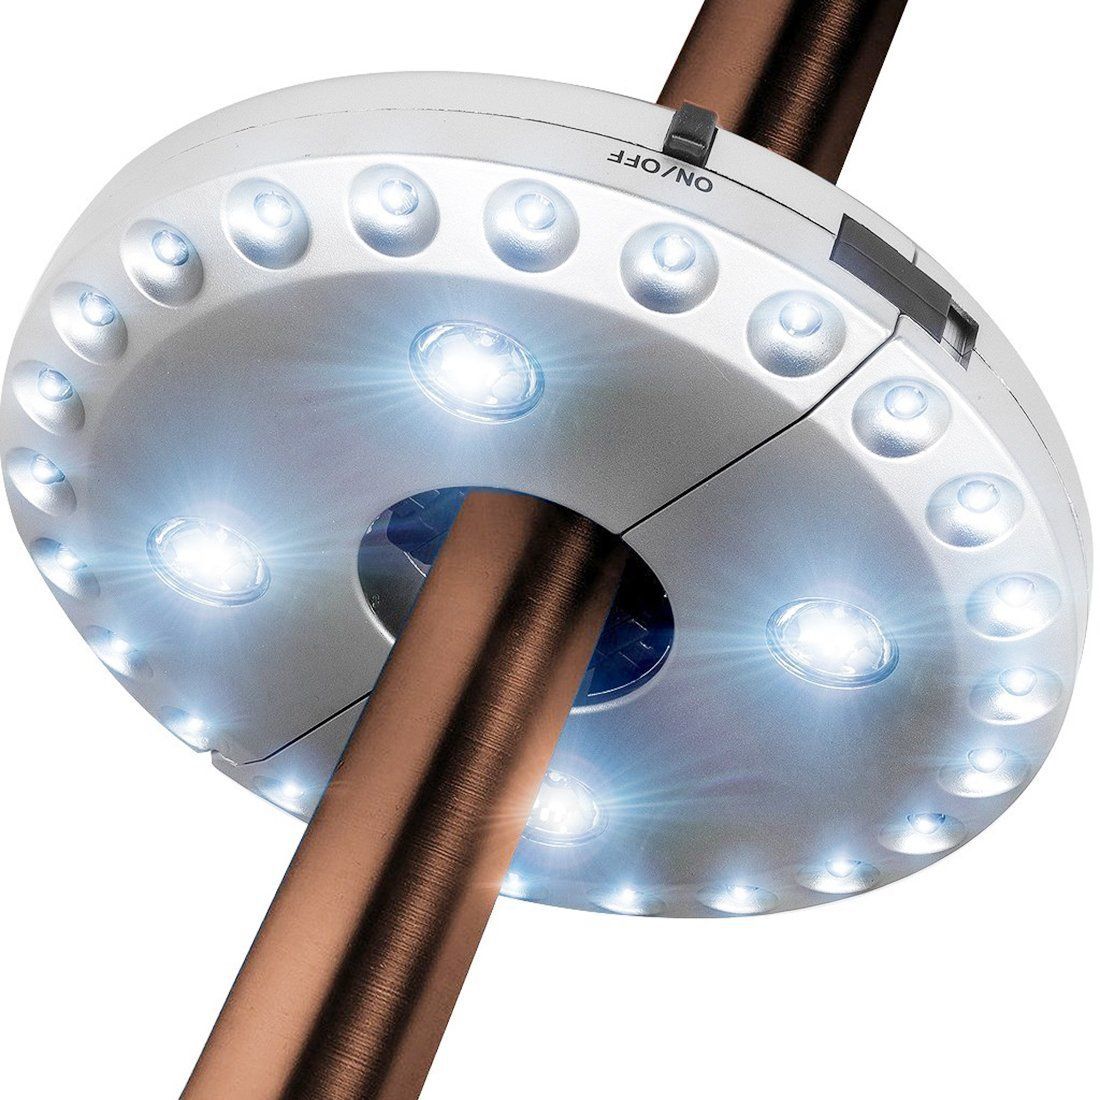 Patio-Umbrella-Light-Battery-Powered-Led-Umbrella-Pole-Light-with-3-Brightness-Modes-Cordless-28-LED-1714464